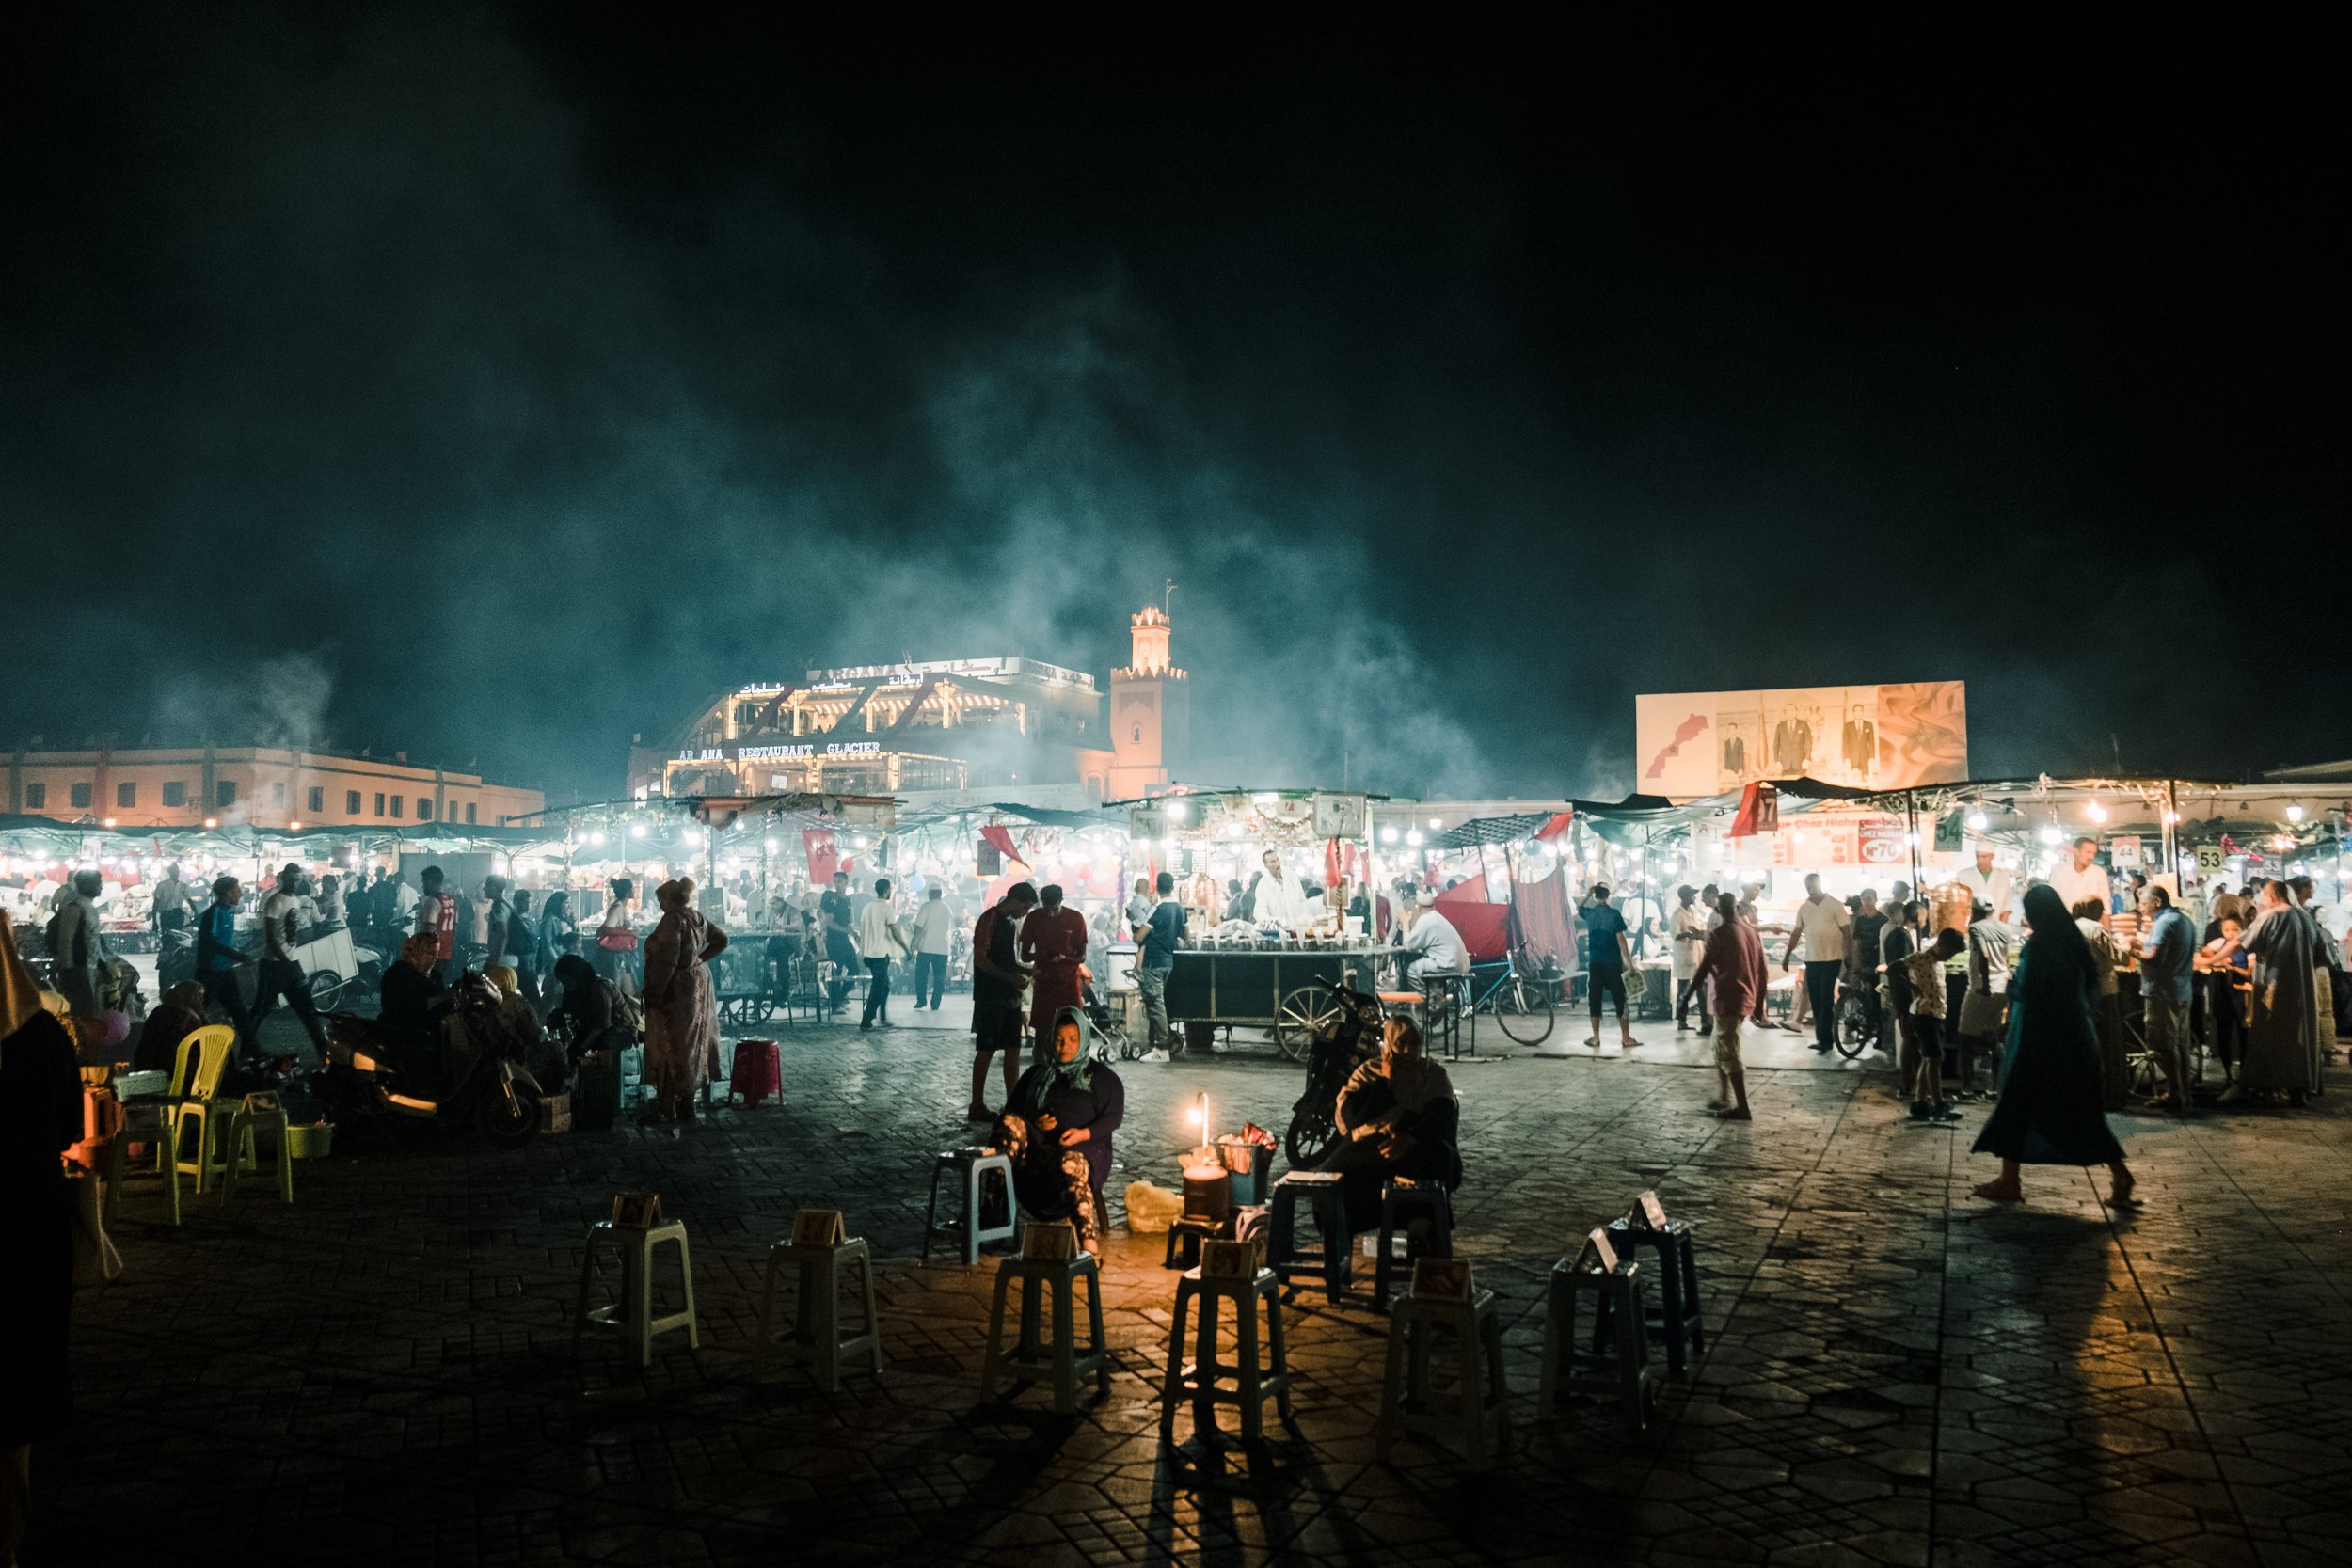 market at night in Morocco.jpg